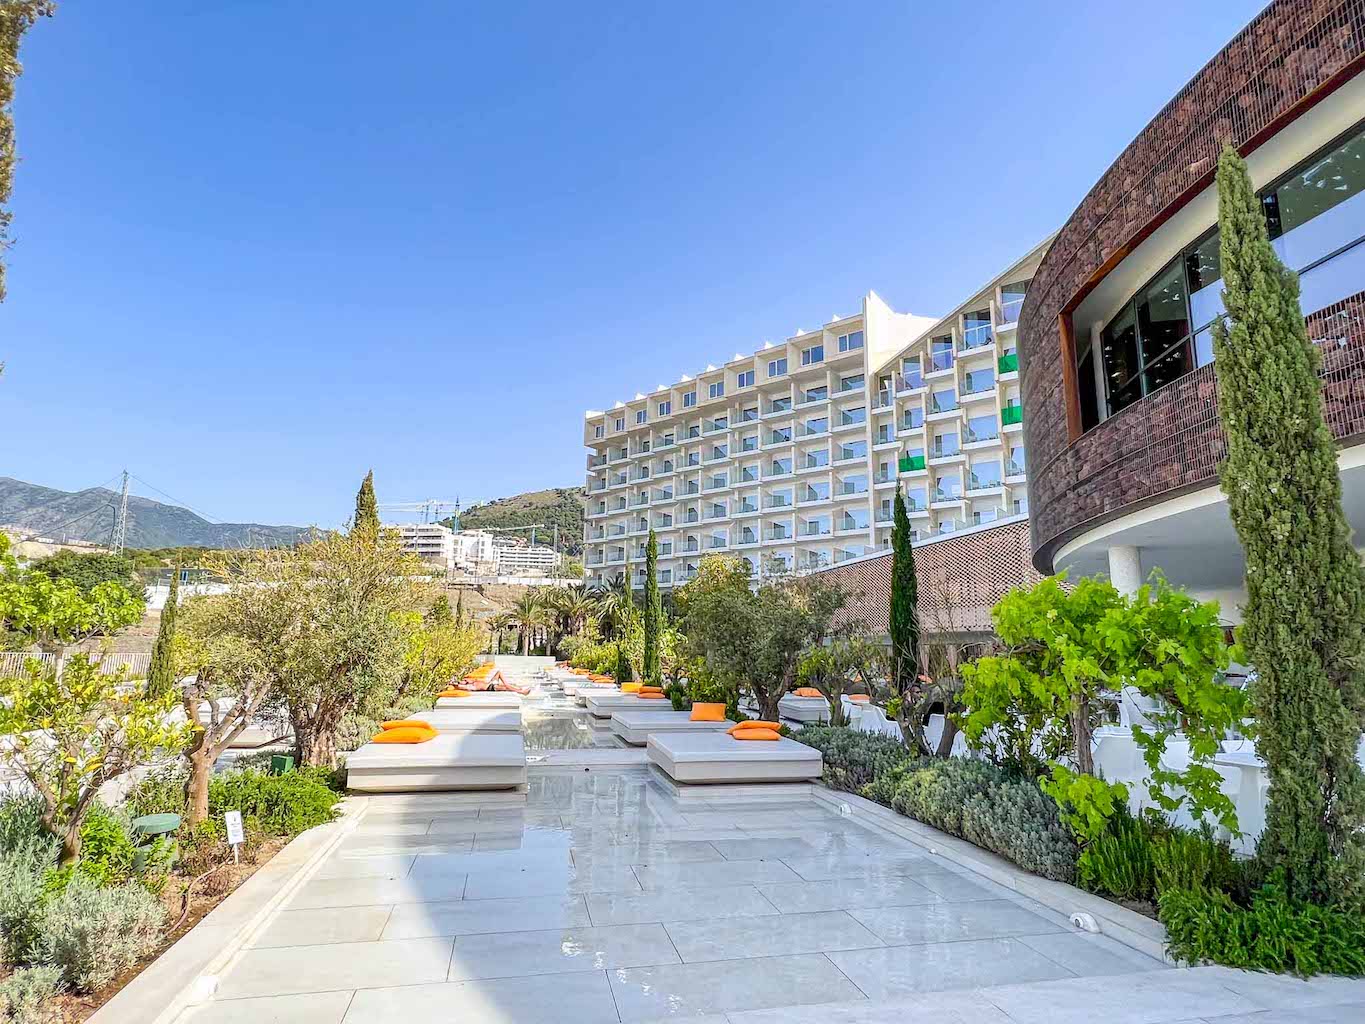 Higuerón Hotel Malaga, sun bed lounger pool